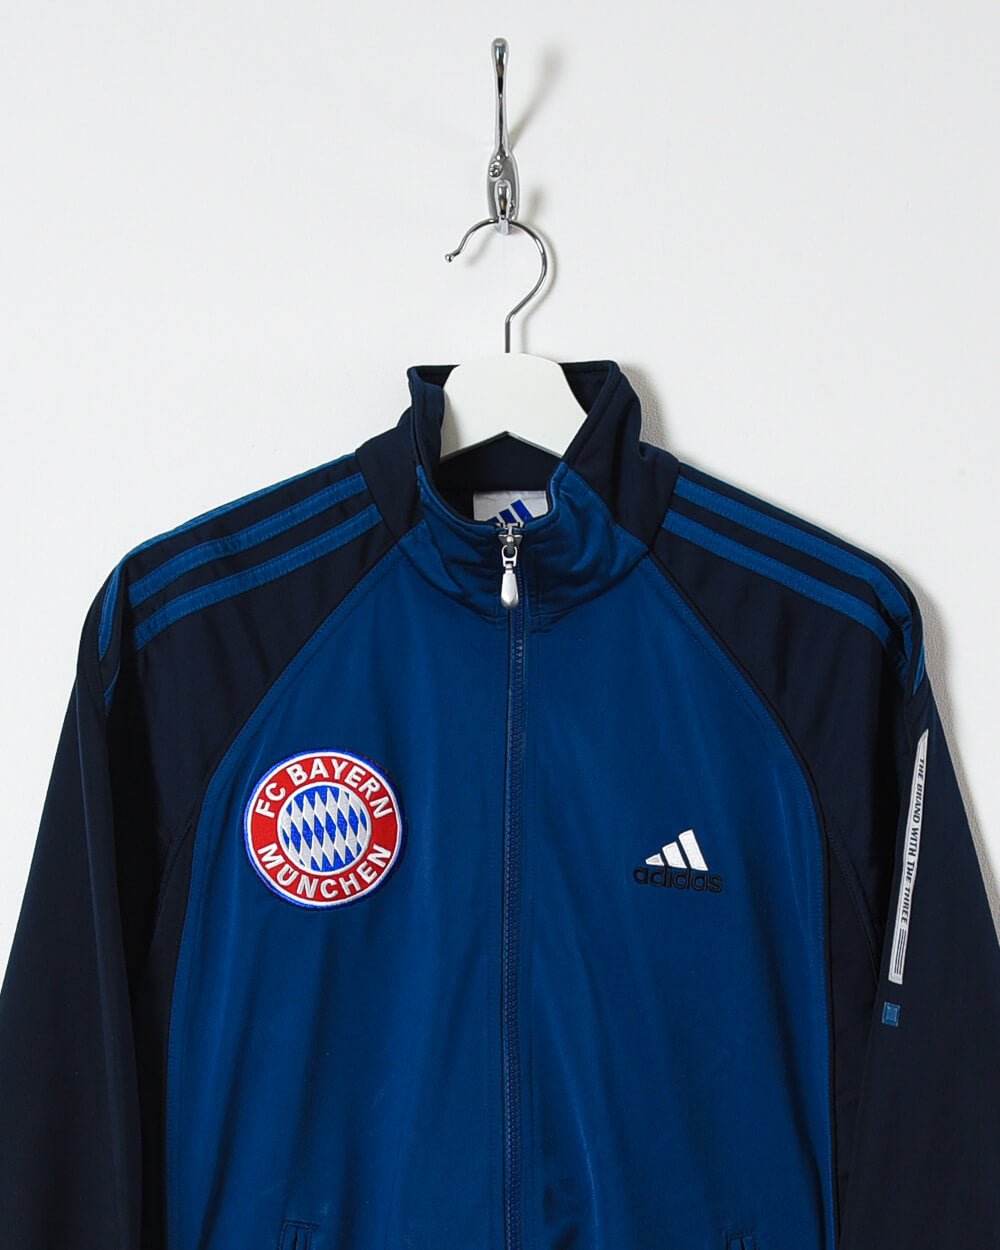 Adidas Bayern Munich Tracksuit Top - Medium - Domno Vintage 90s, 80s, 00s Retro and Vintage Clothing 